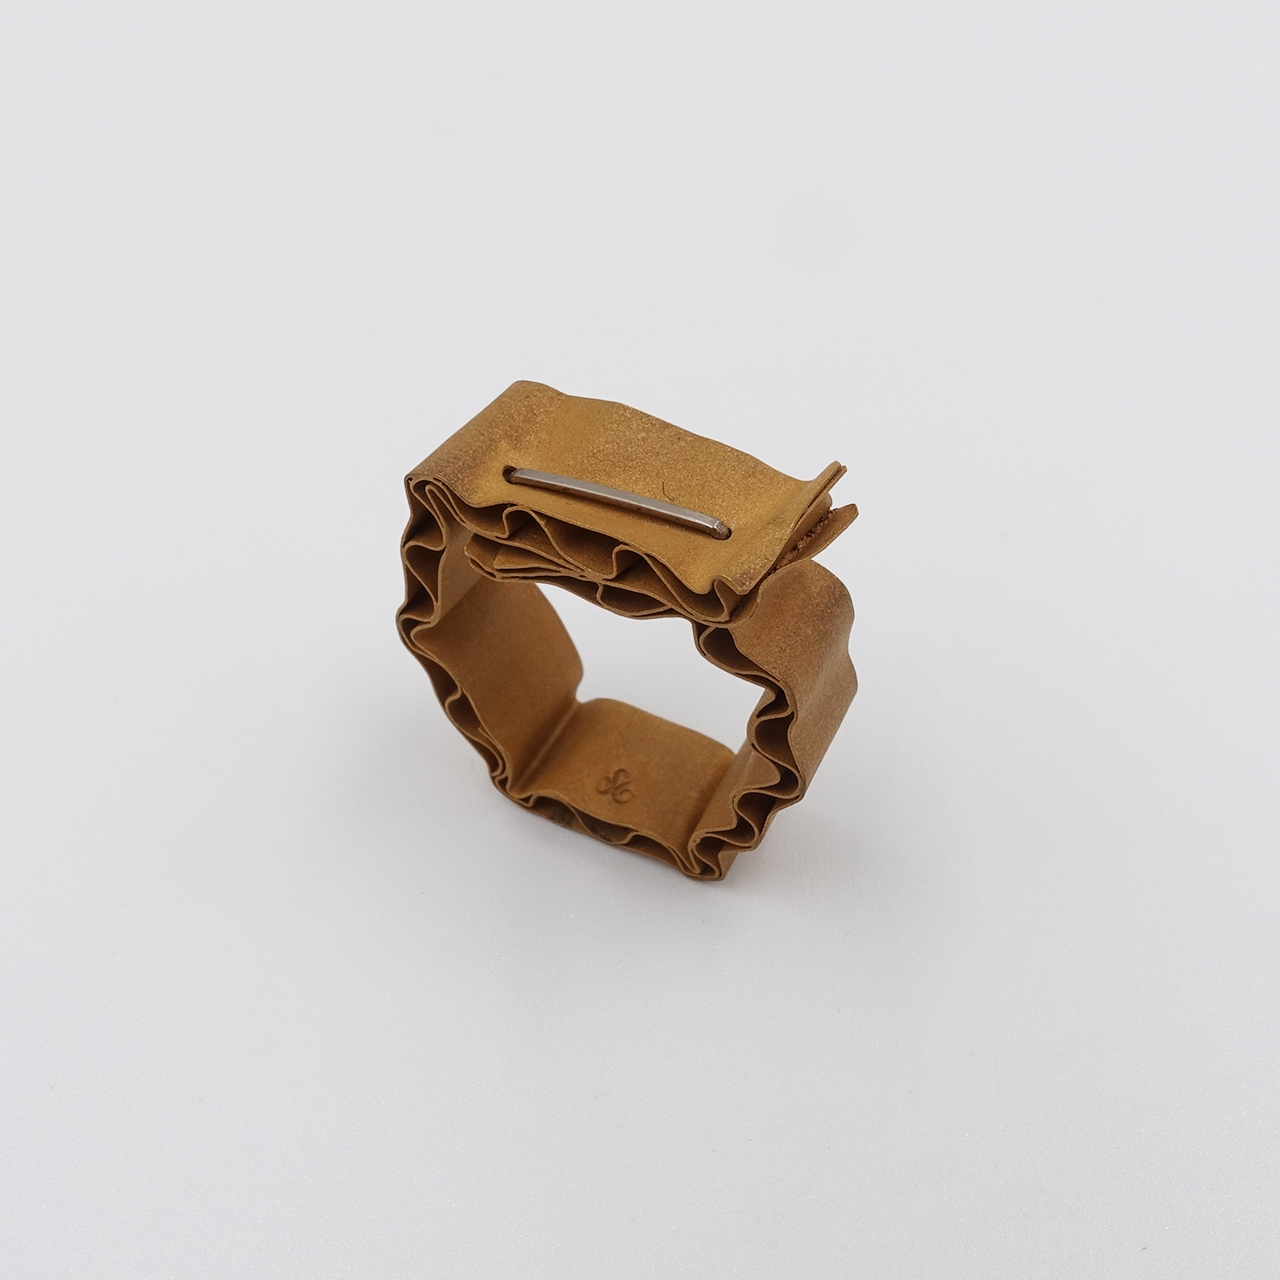 Cardboard Ring by David Bielander